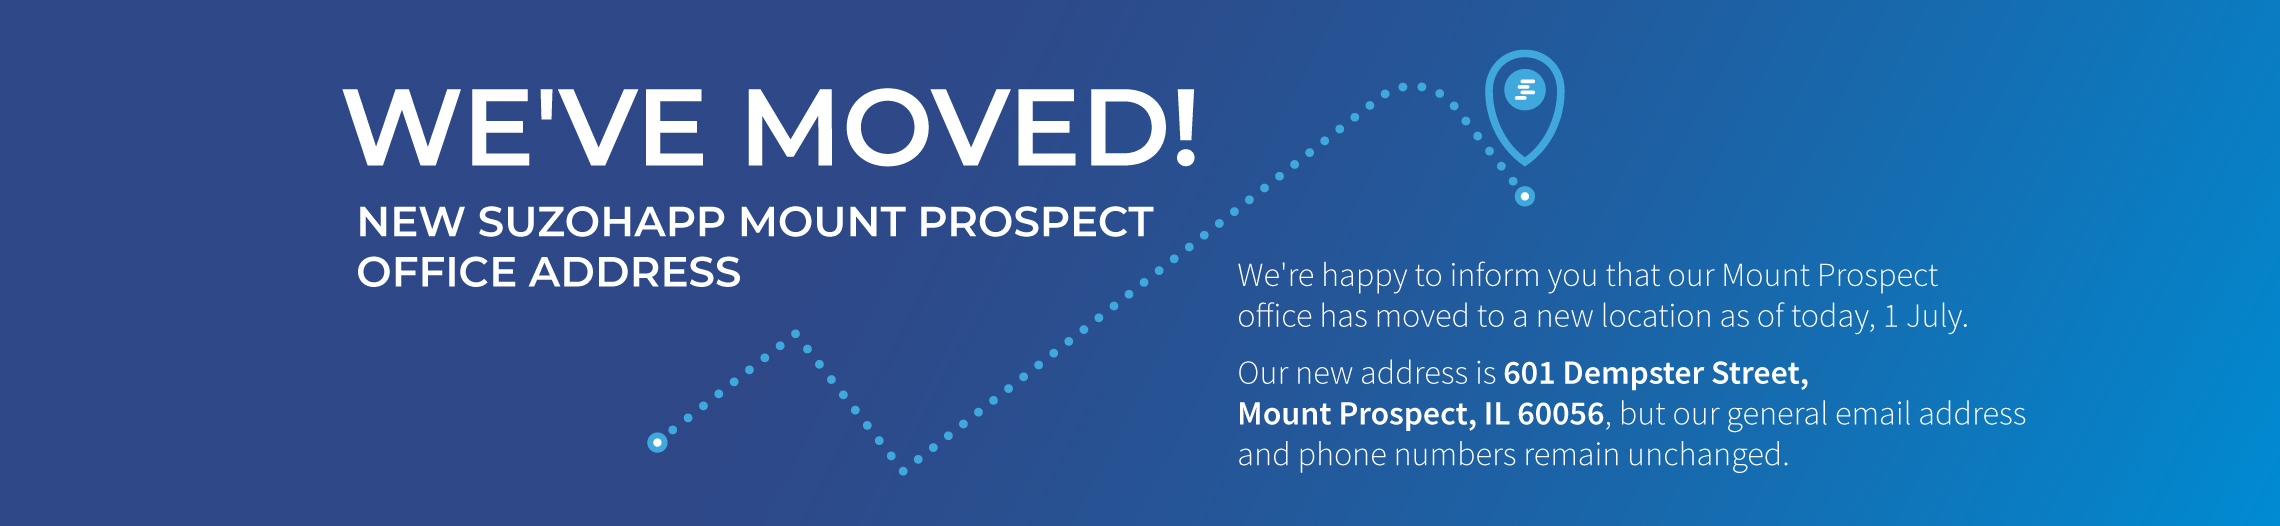 New Mount Prospect Office Address